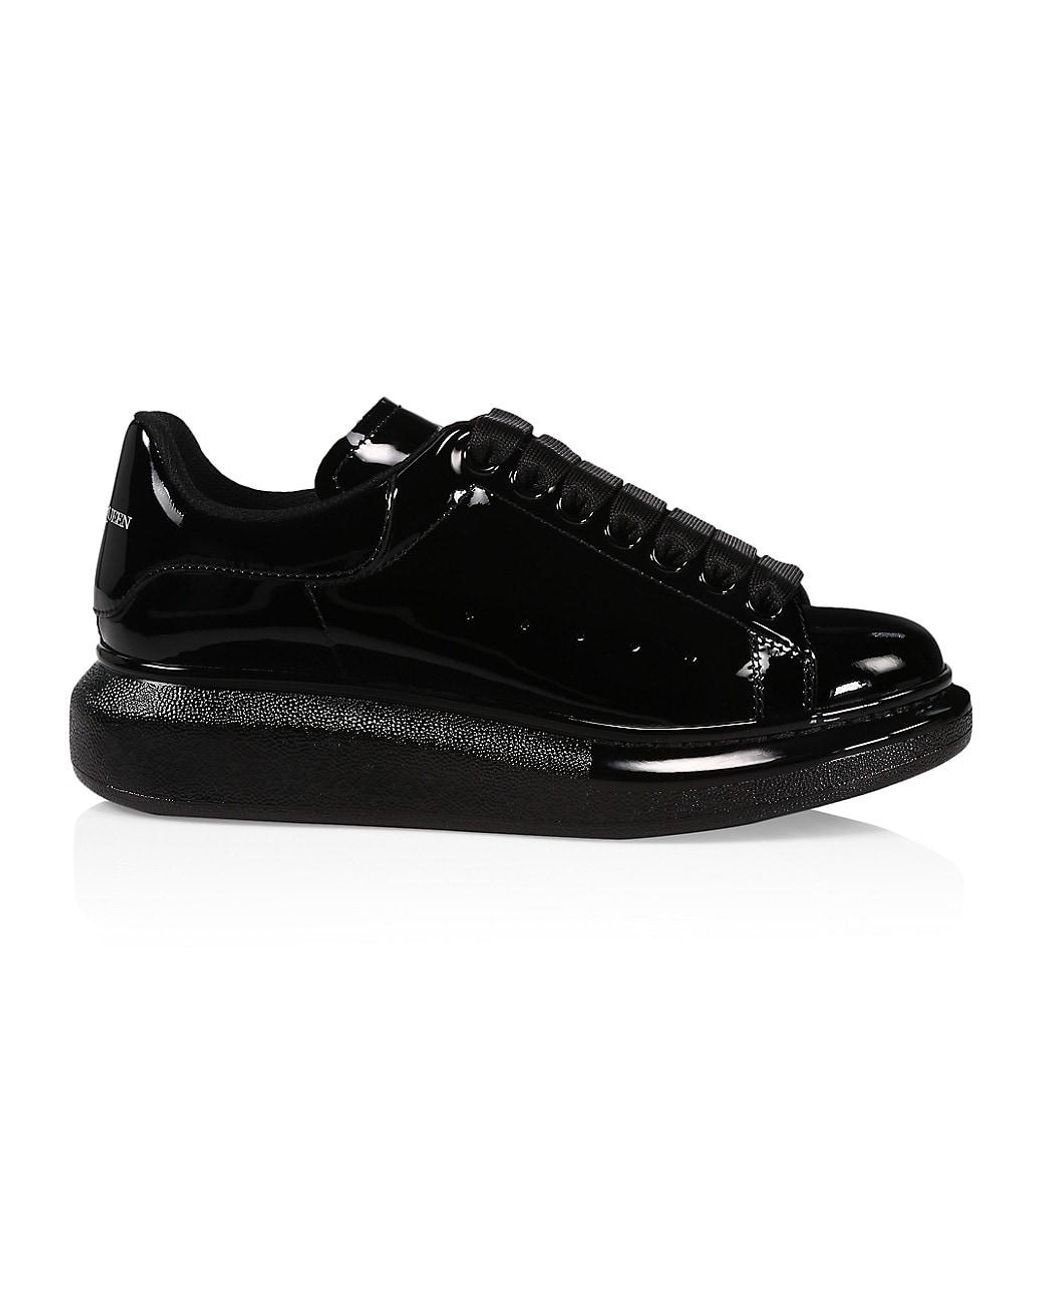 Alexander McQueen Patent Leather Oversized Sneakers in Black | Lyst